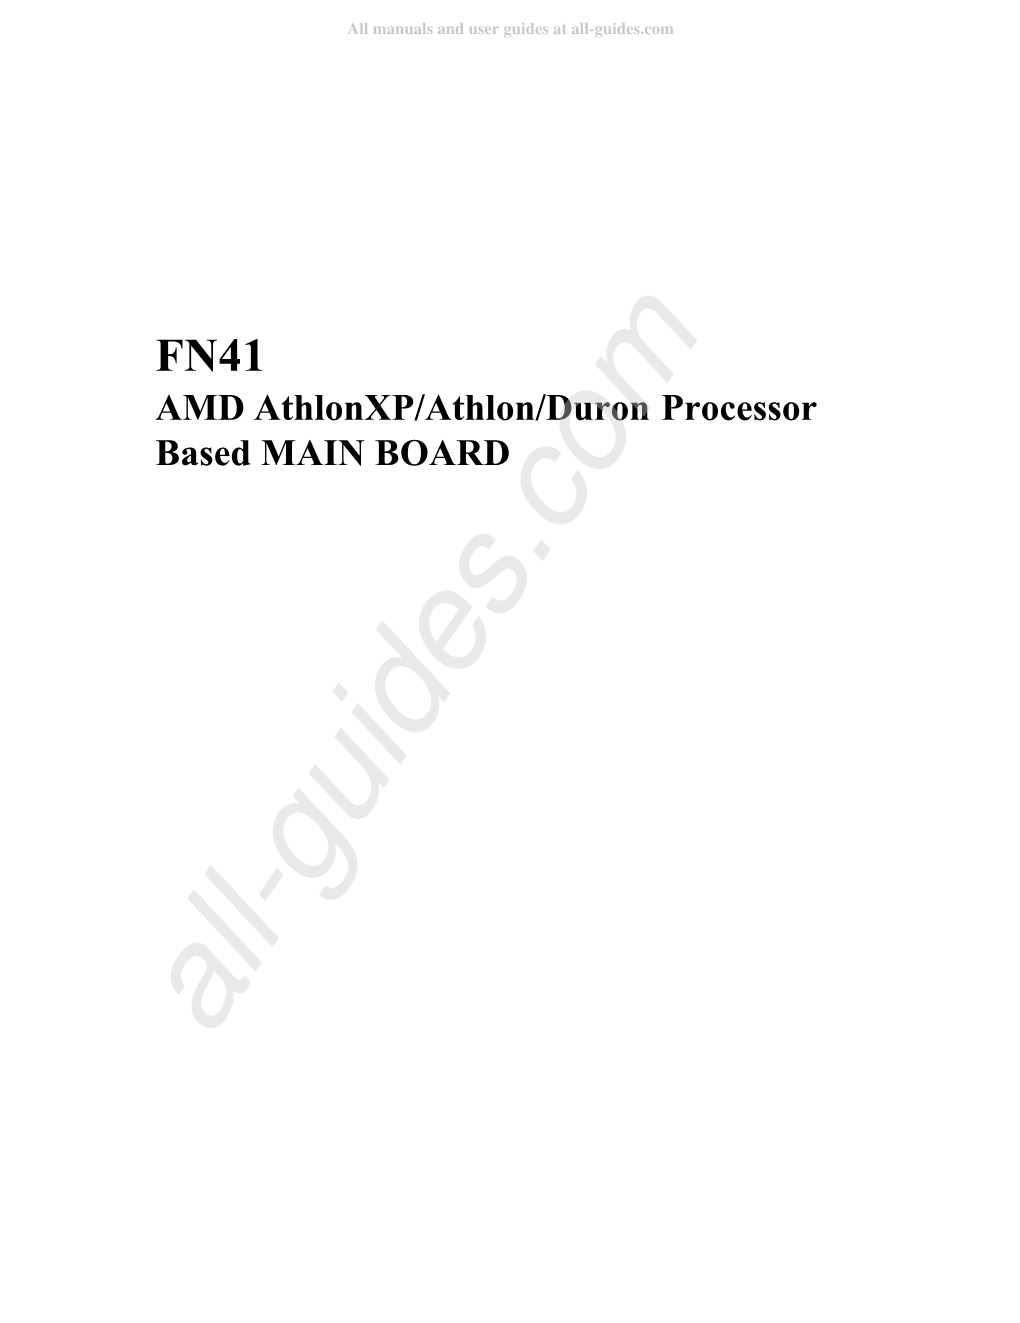 AMD Athlonxp/Athlon/Duron Processor Based MAIN BOARD